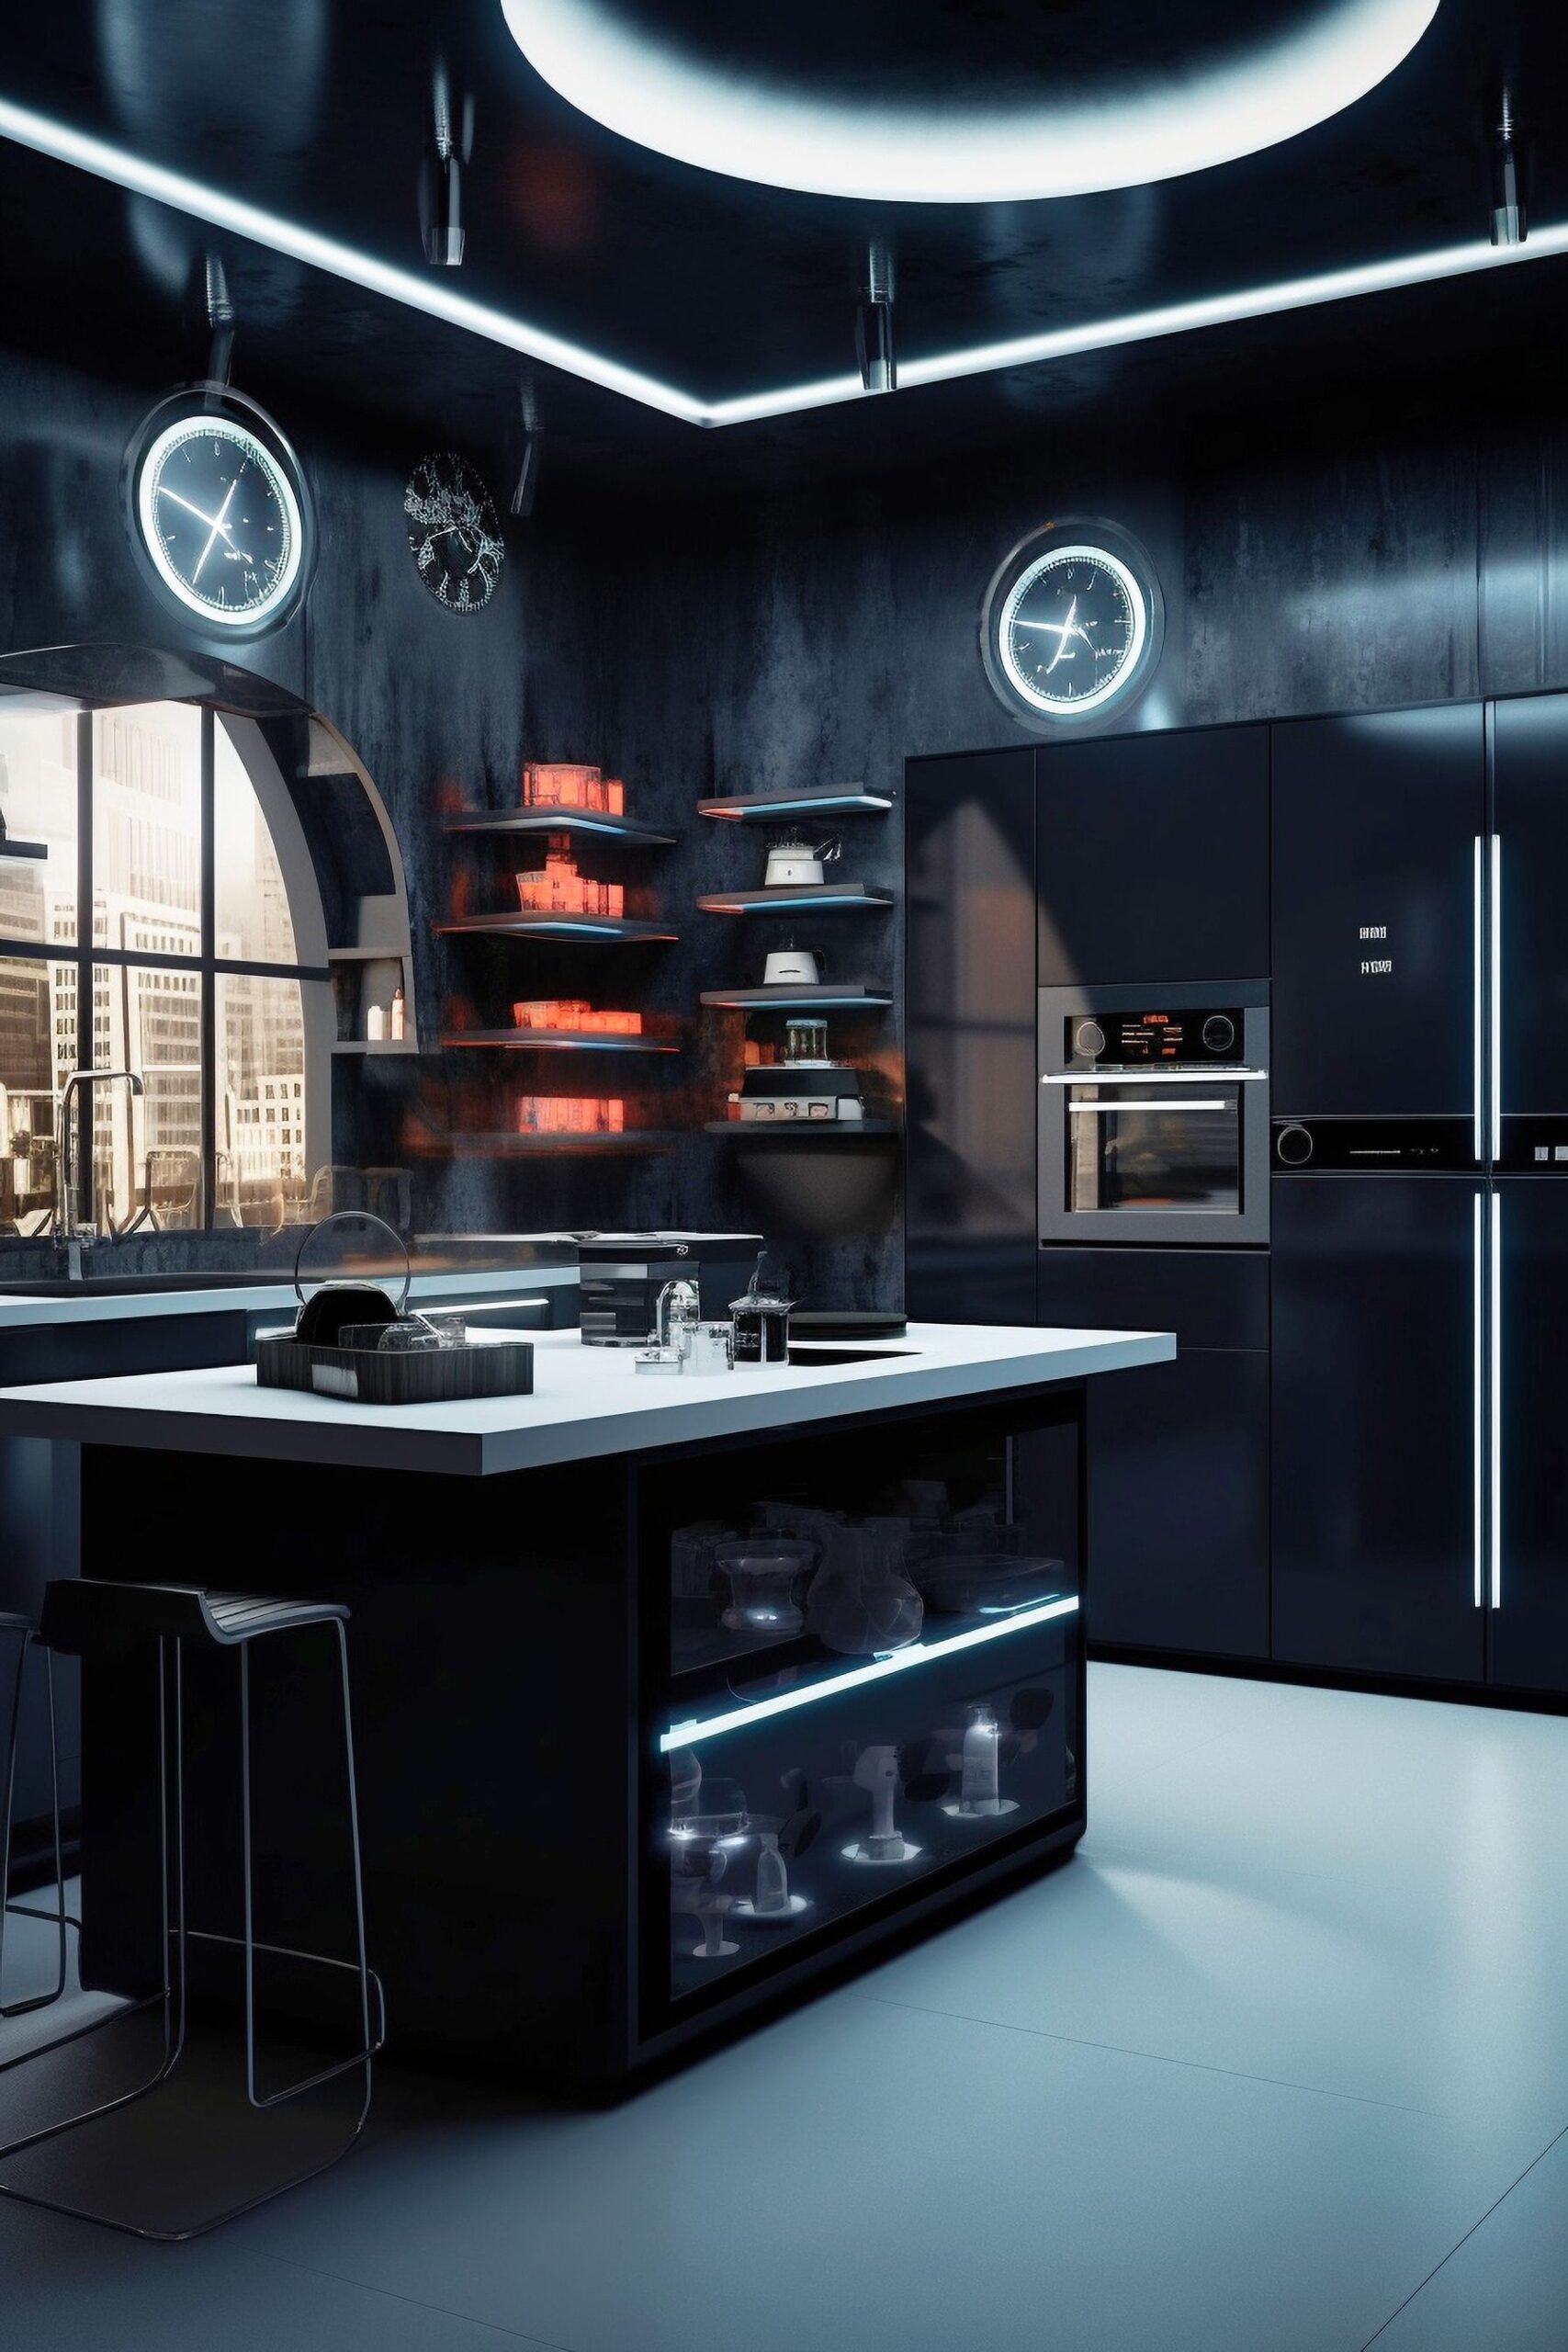 A Glimpse into the Striking Futuristic Kitchen of Tomorrow